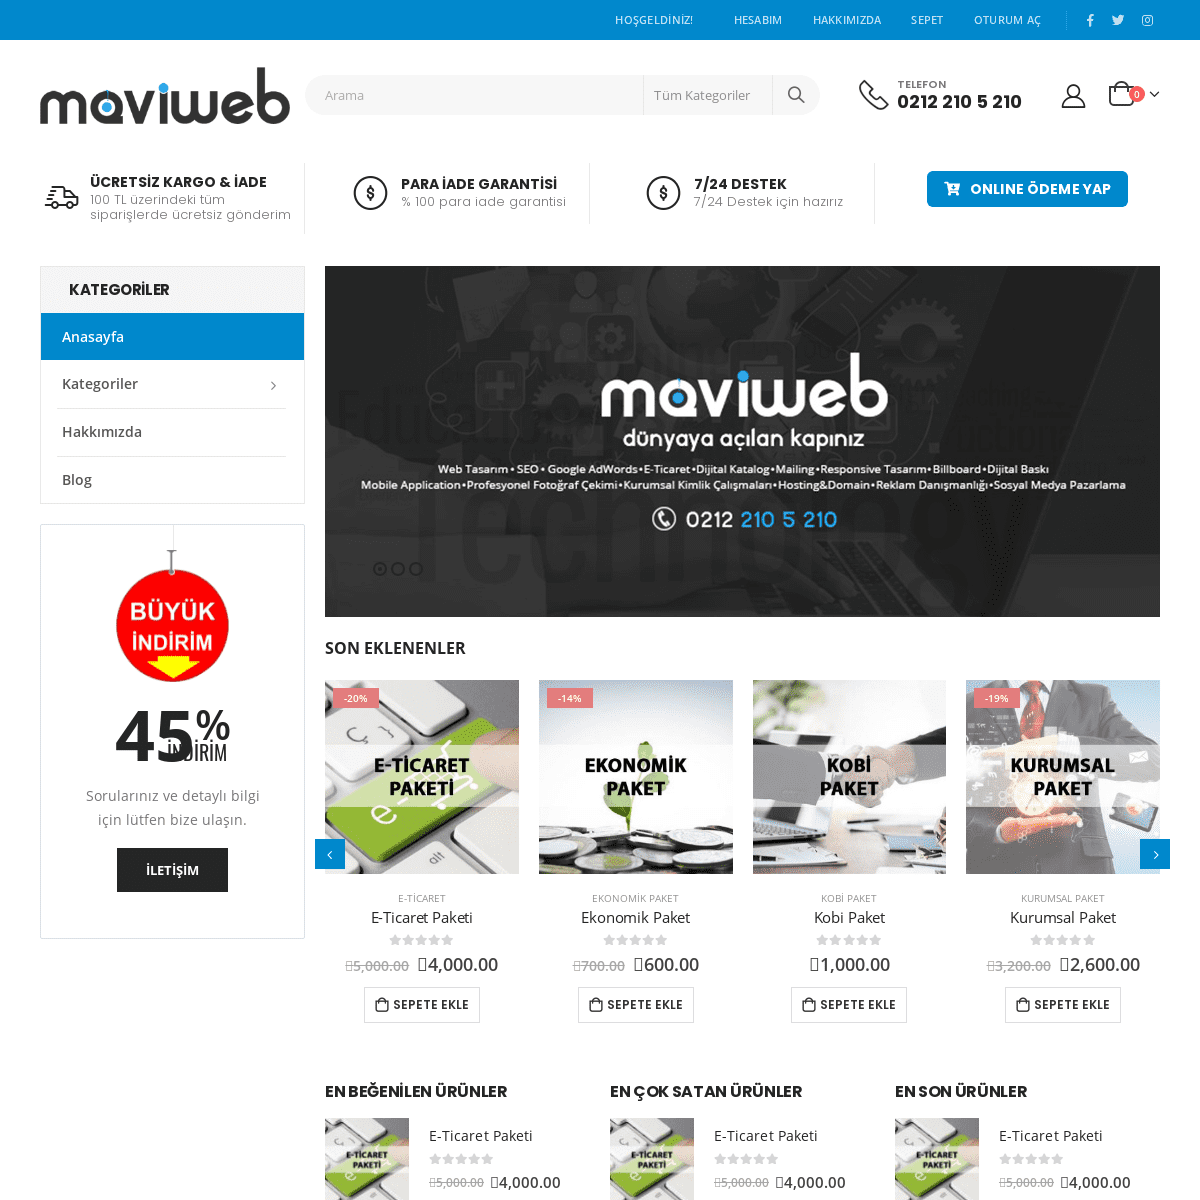 A complete backup of https://maviweb.org